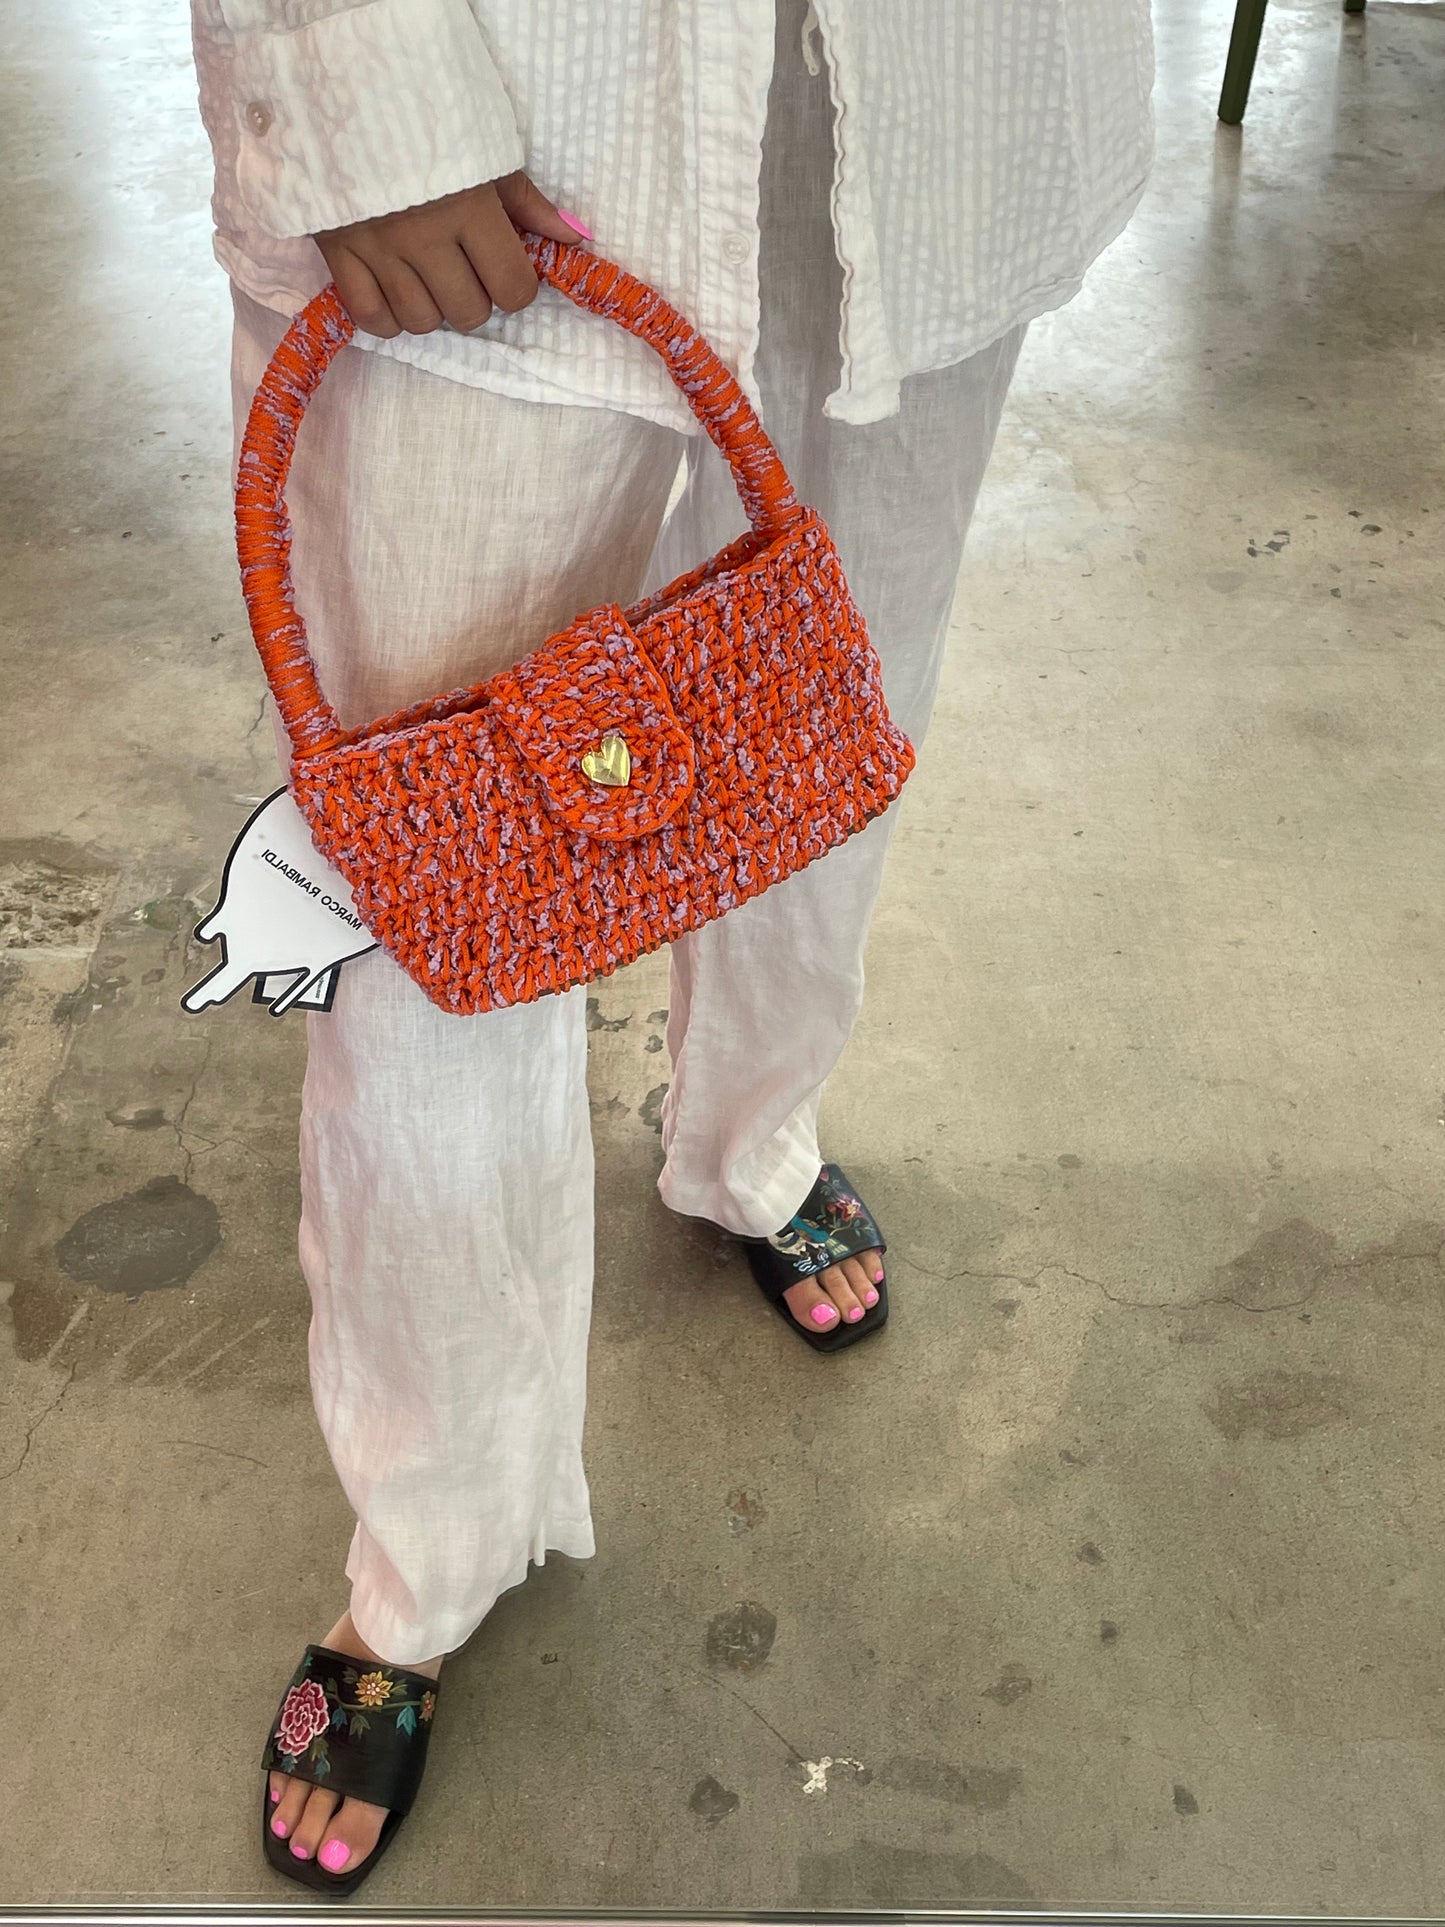 Marco Rambaldi - Knitwear Baguette Bag: Orange